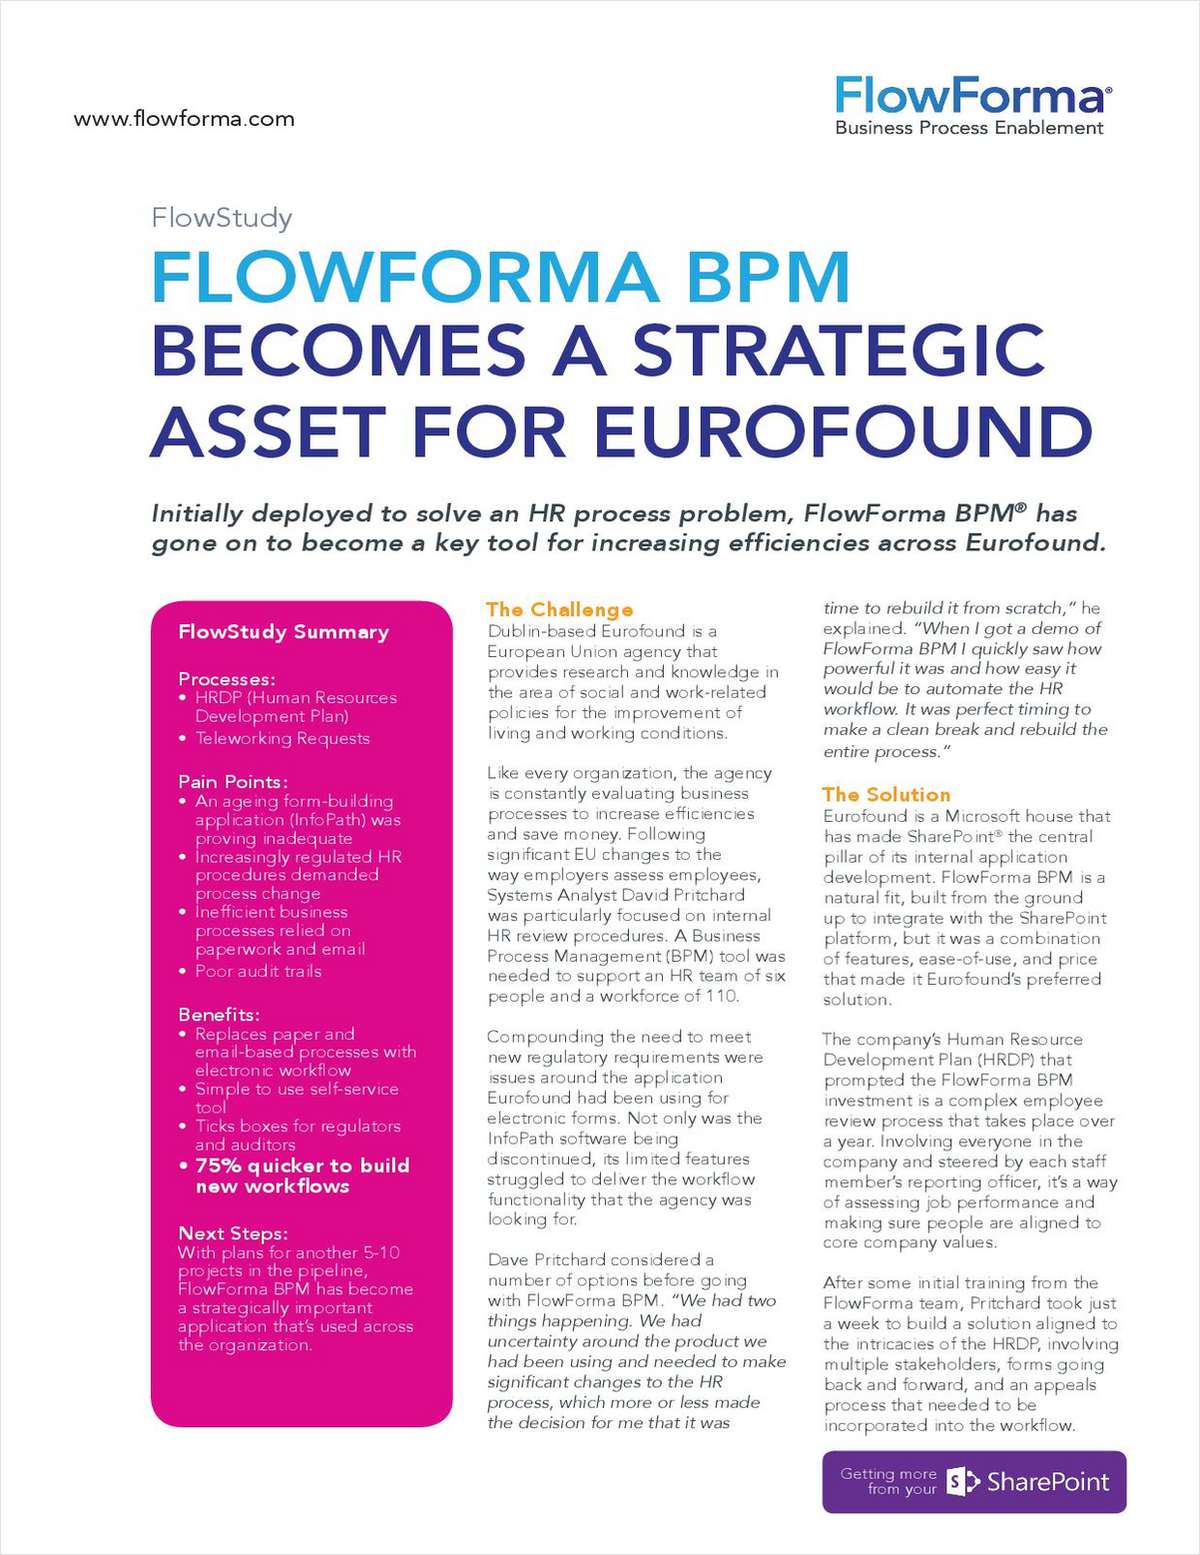 Eurofound Adopts FlowForma BPM To Drive 75% Efficiency Improvement